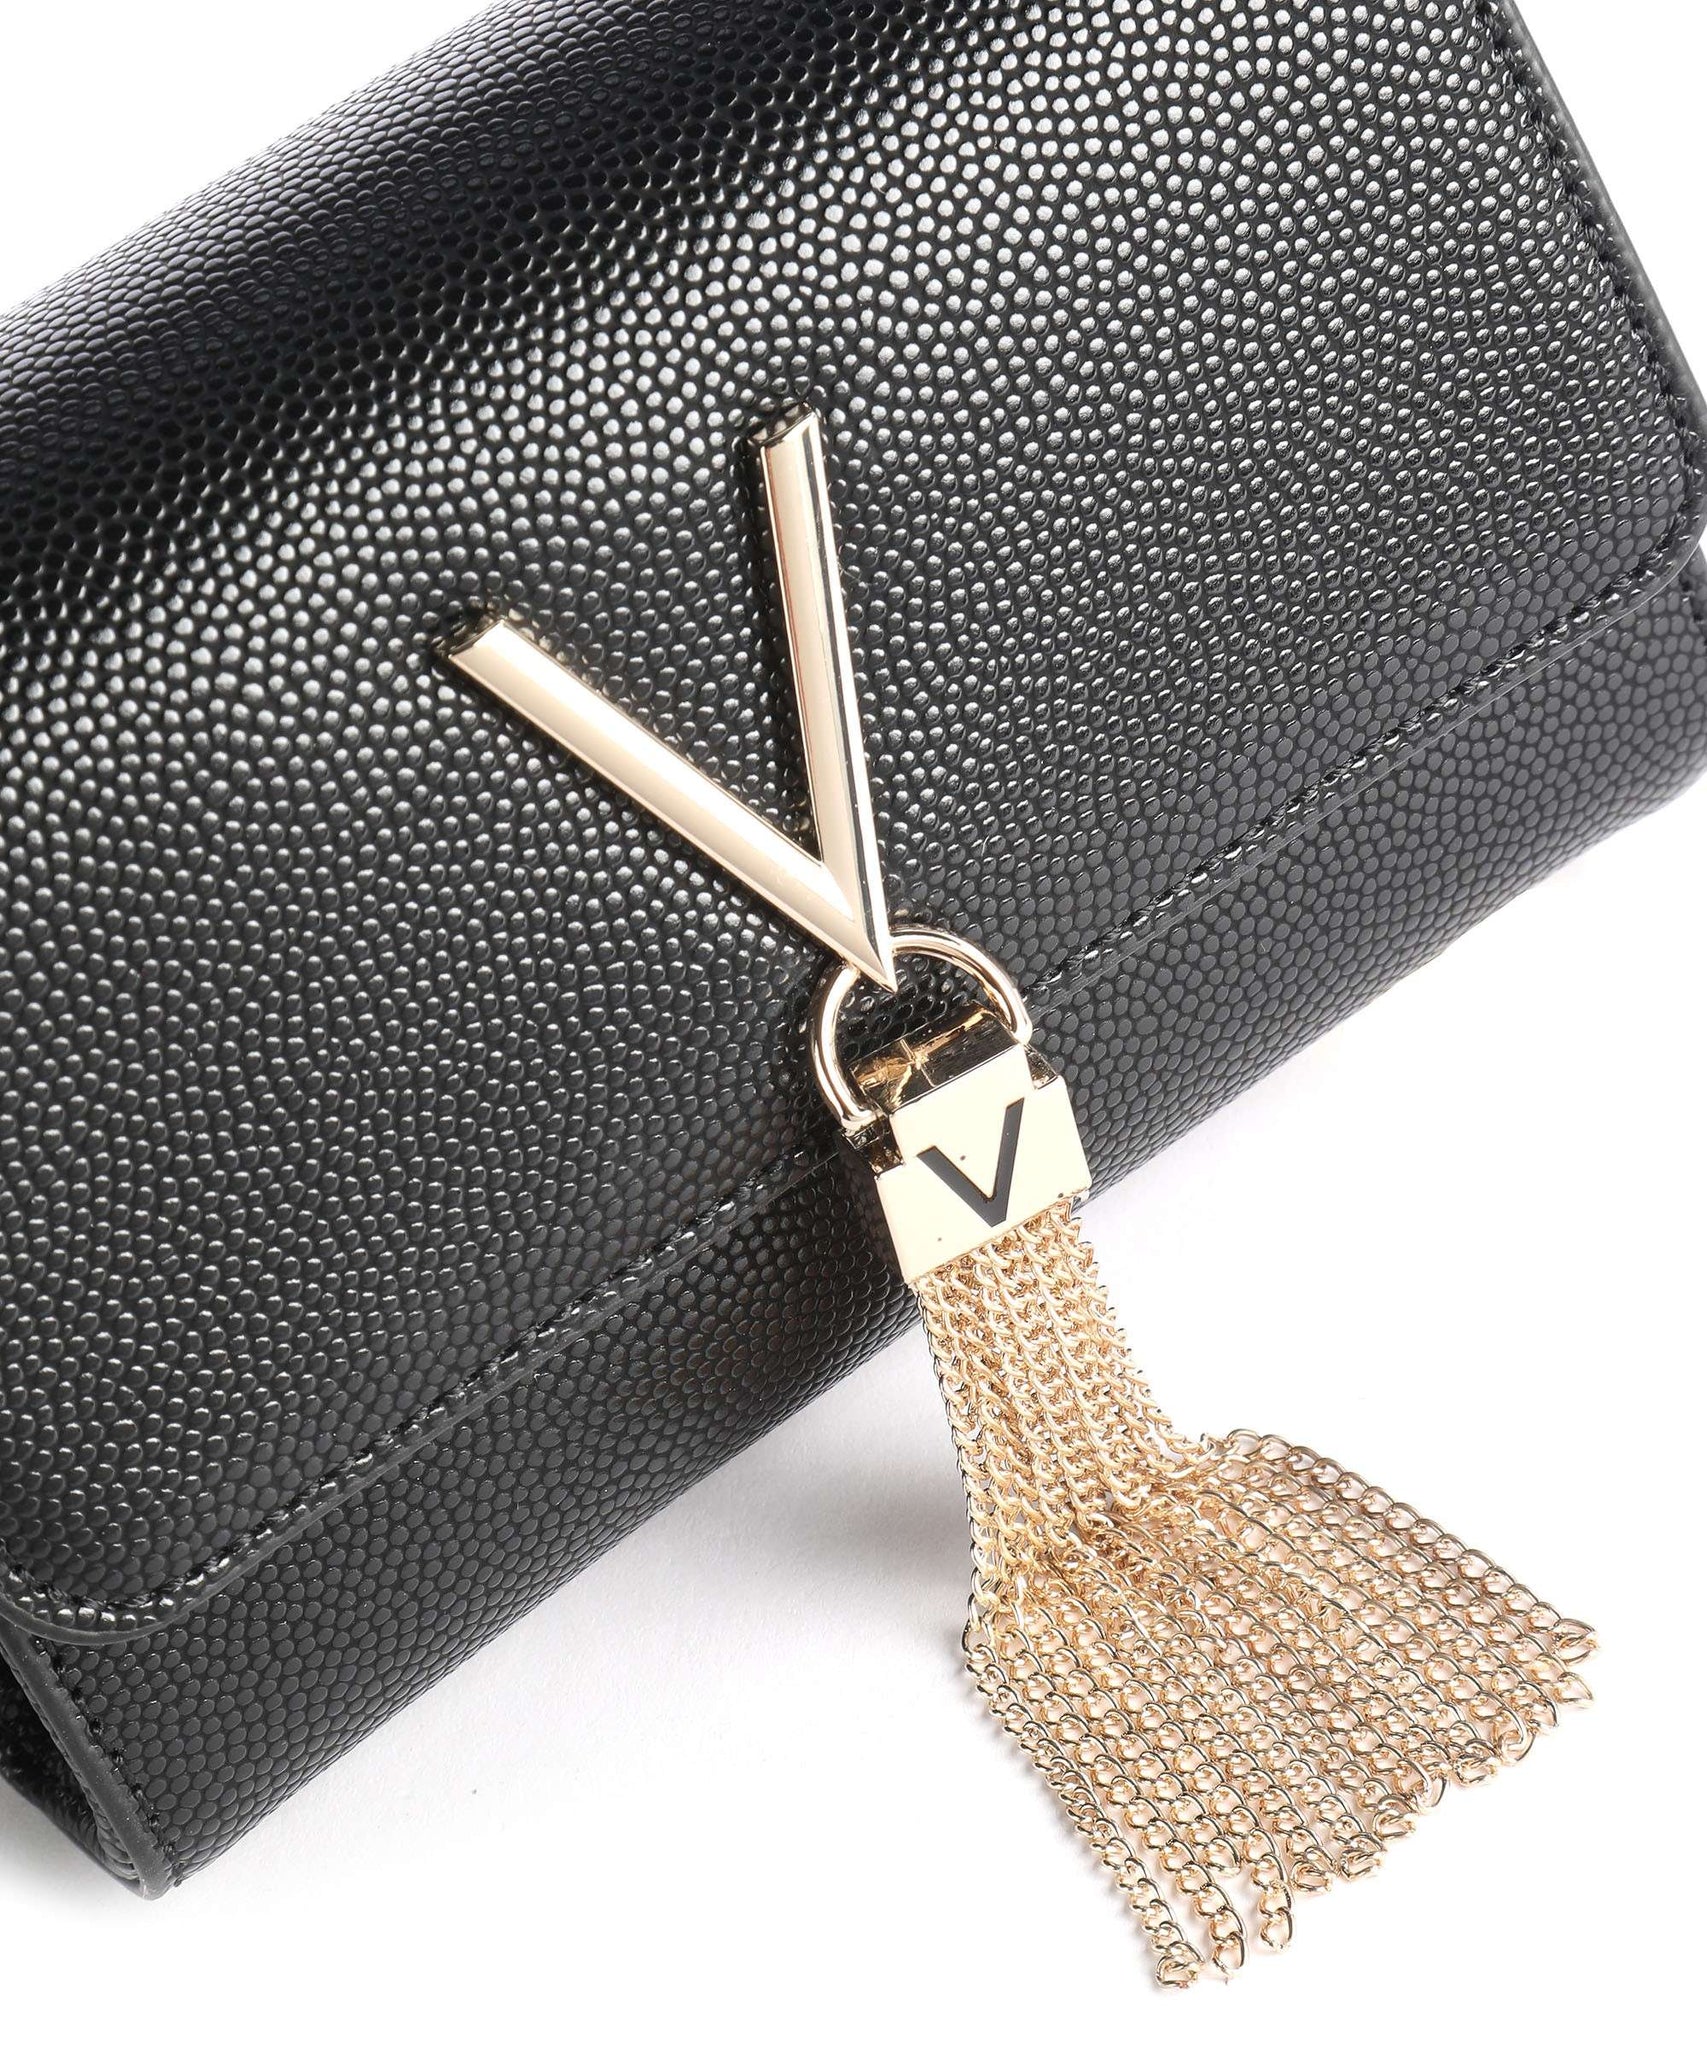 Genuine Valentino Garavani black patent leather Catch satchel bag purse |  eBay